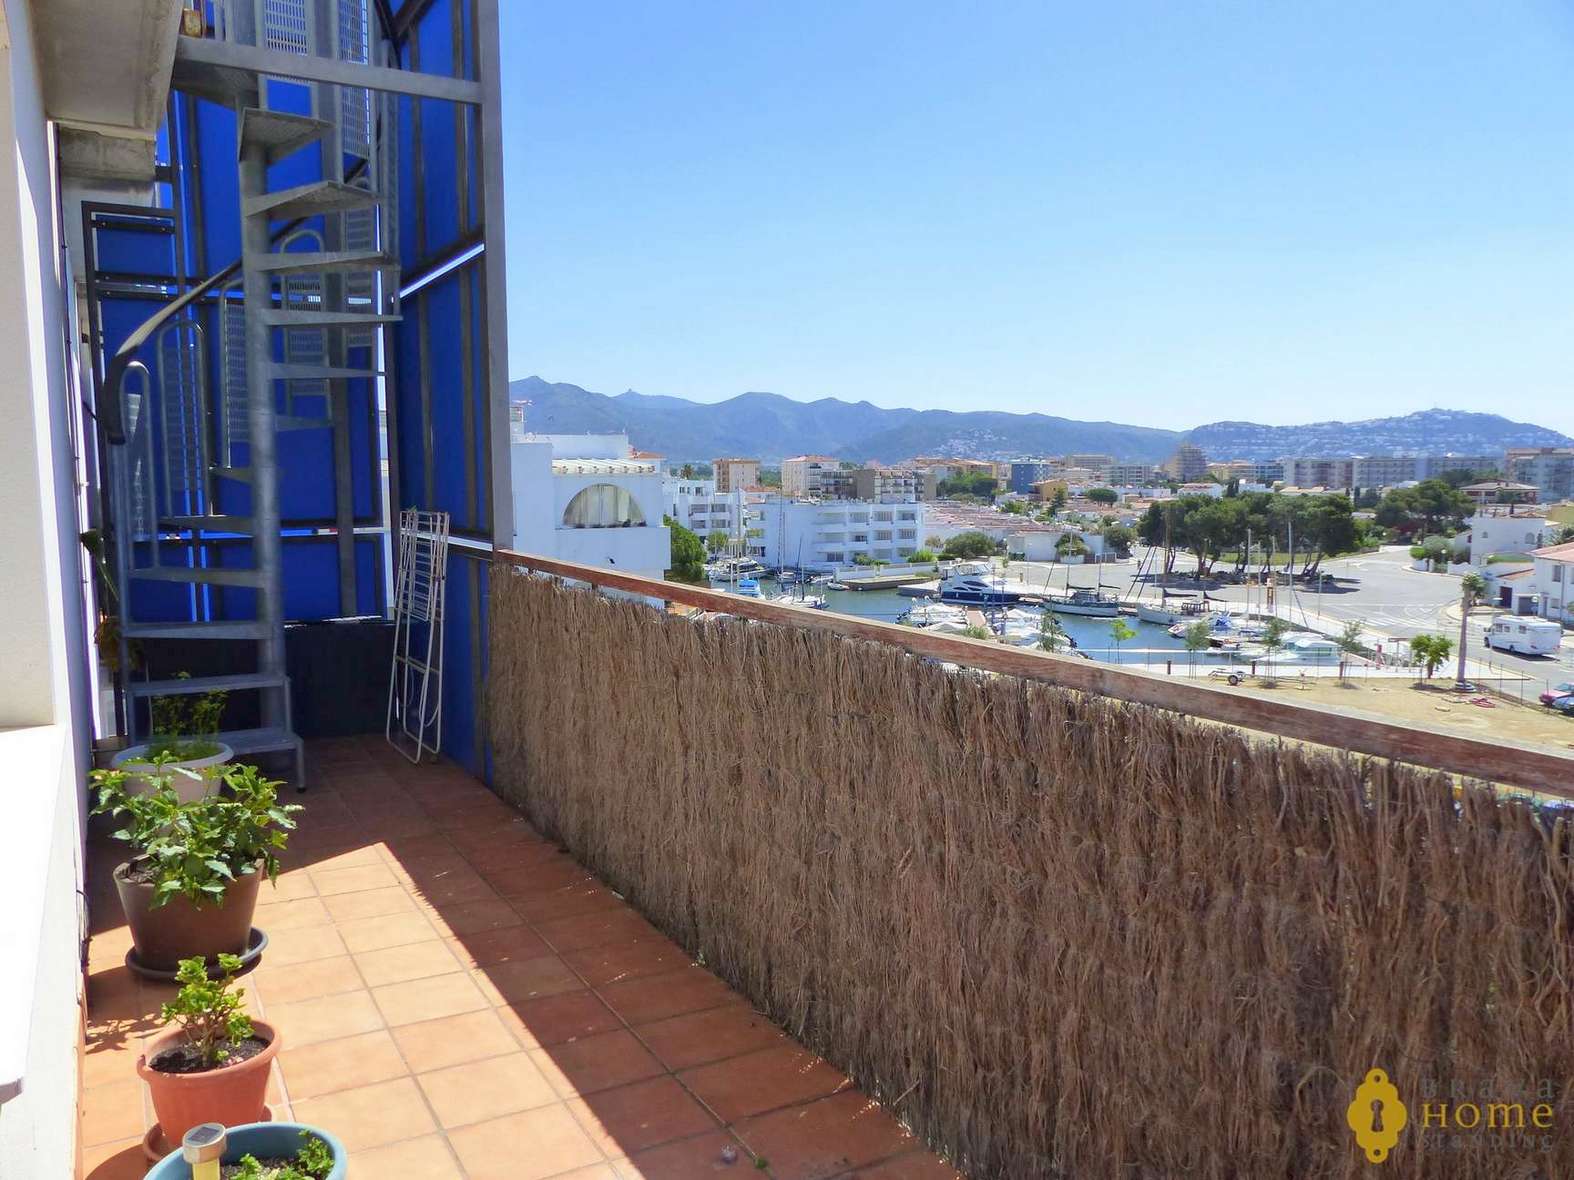 Beautiful apartment with terrace, sea views, and pool, for sale in Rosas - Santa Margarita